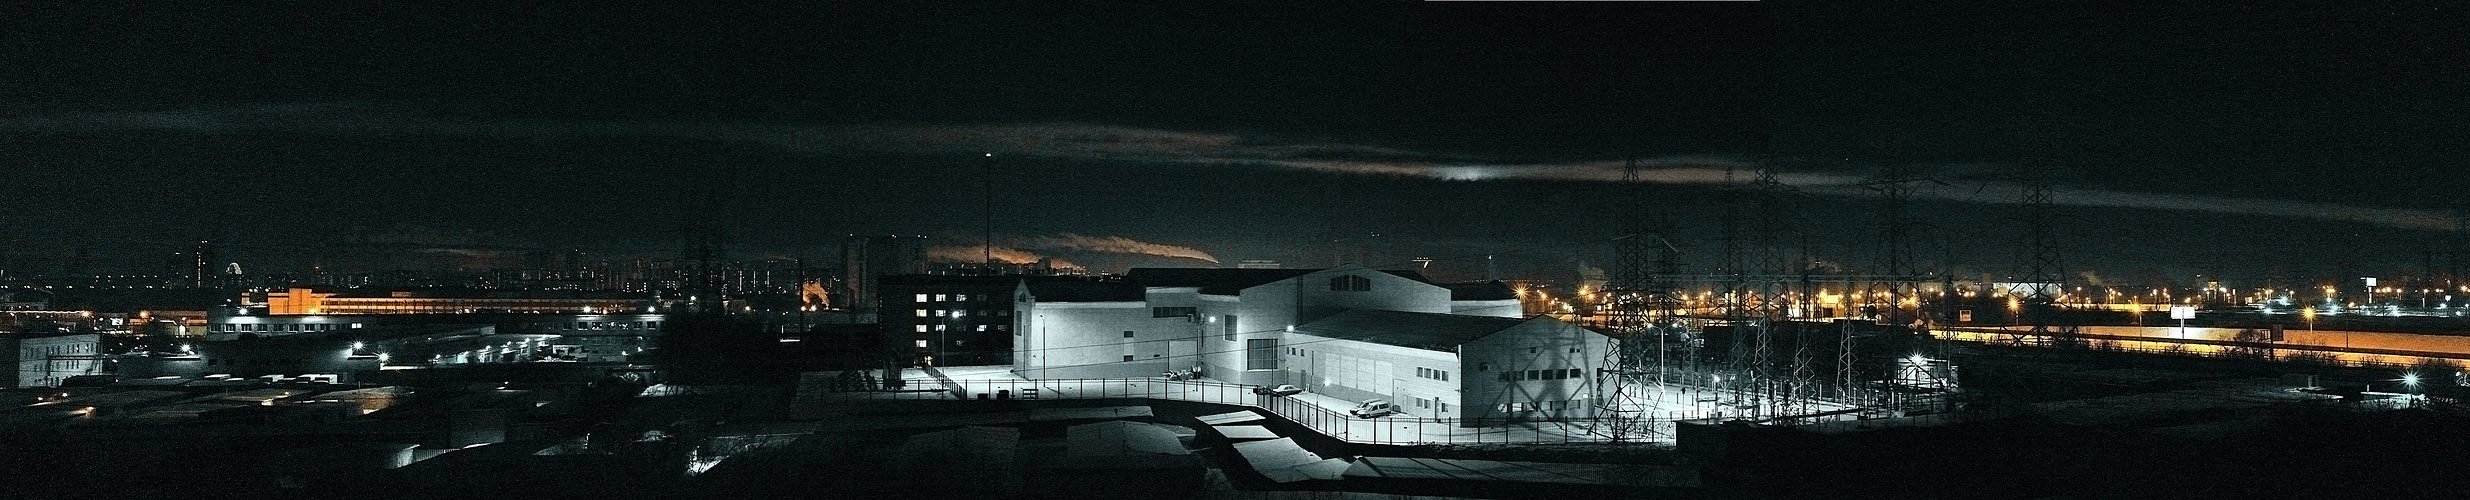 industrial,panorama,ночной,город,москва,тушино,январь,2009, Александр Путев